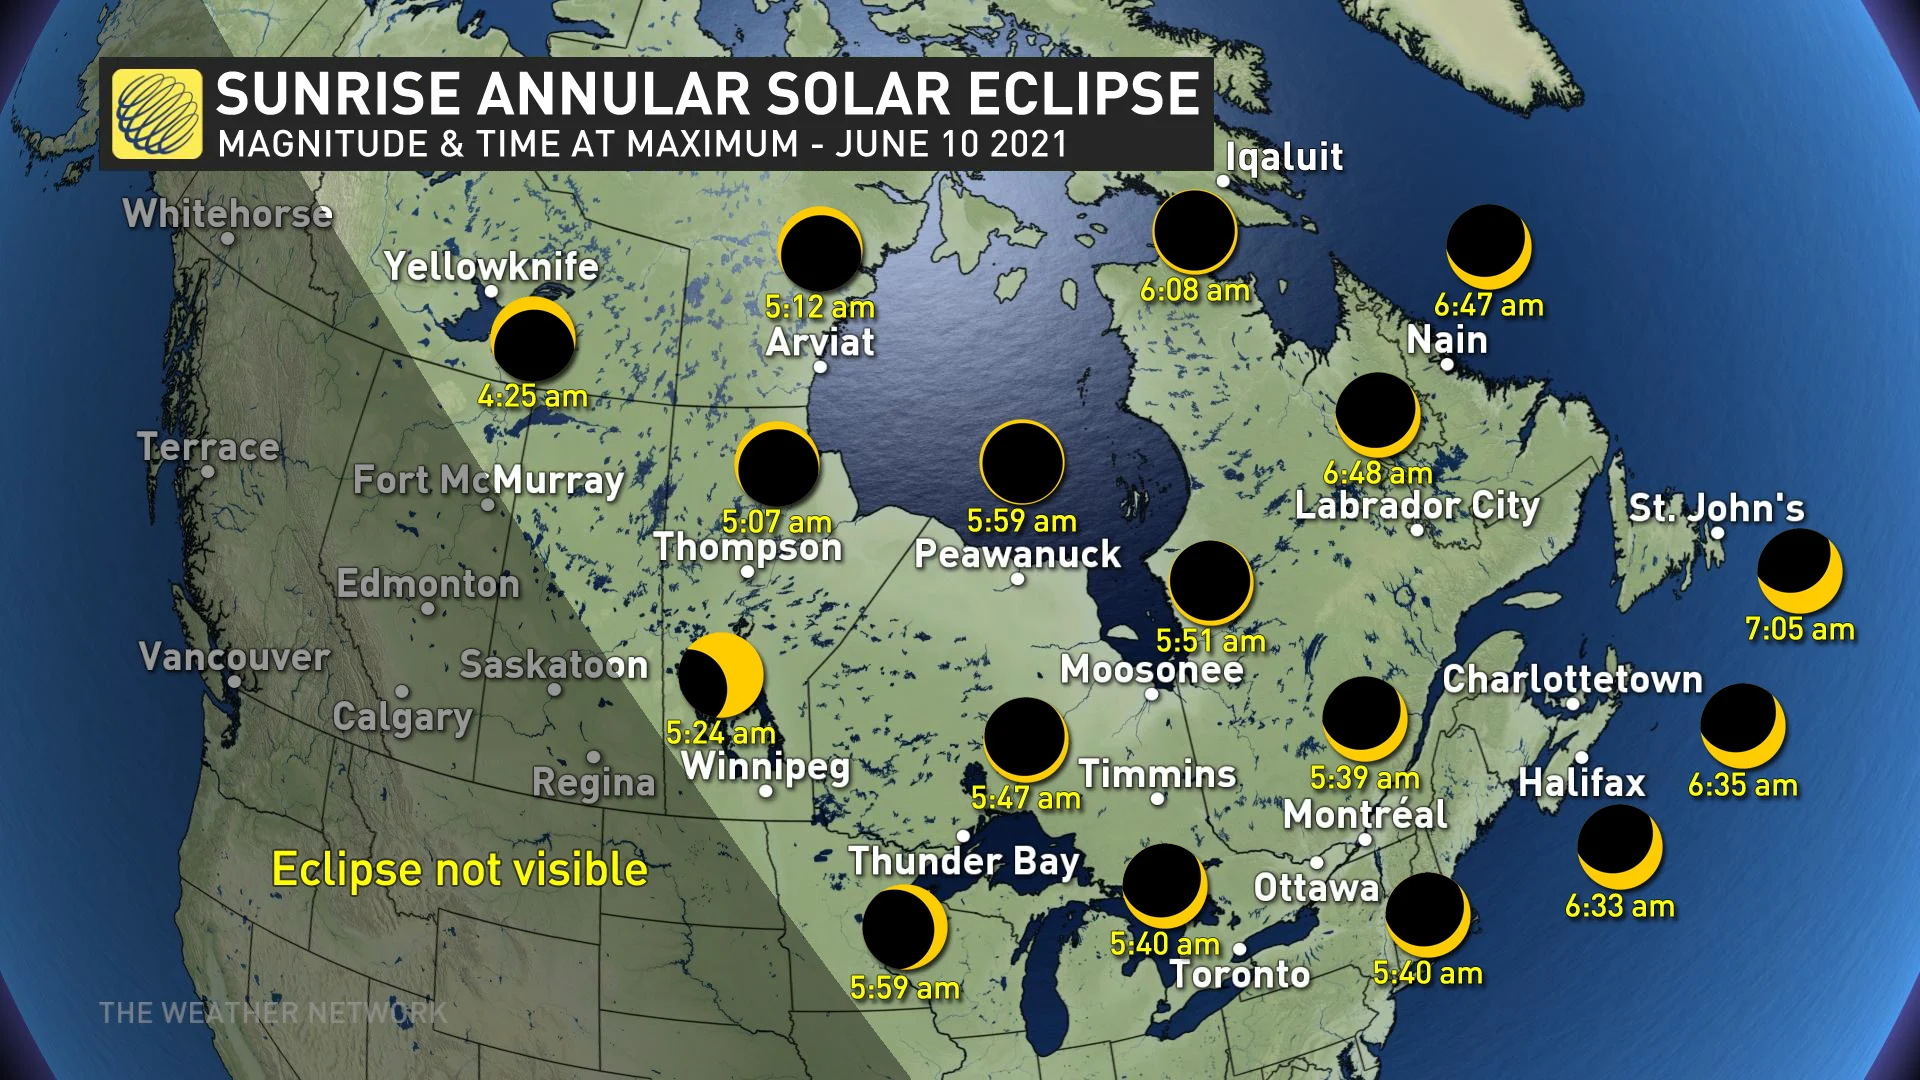 Sunrise-Annular-Solar-Eclipse-View-magnitude-maxtime-locations